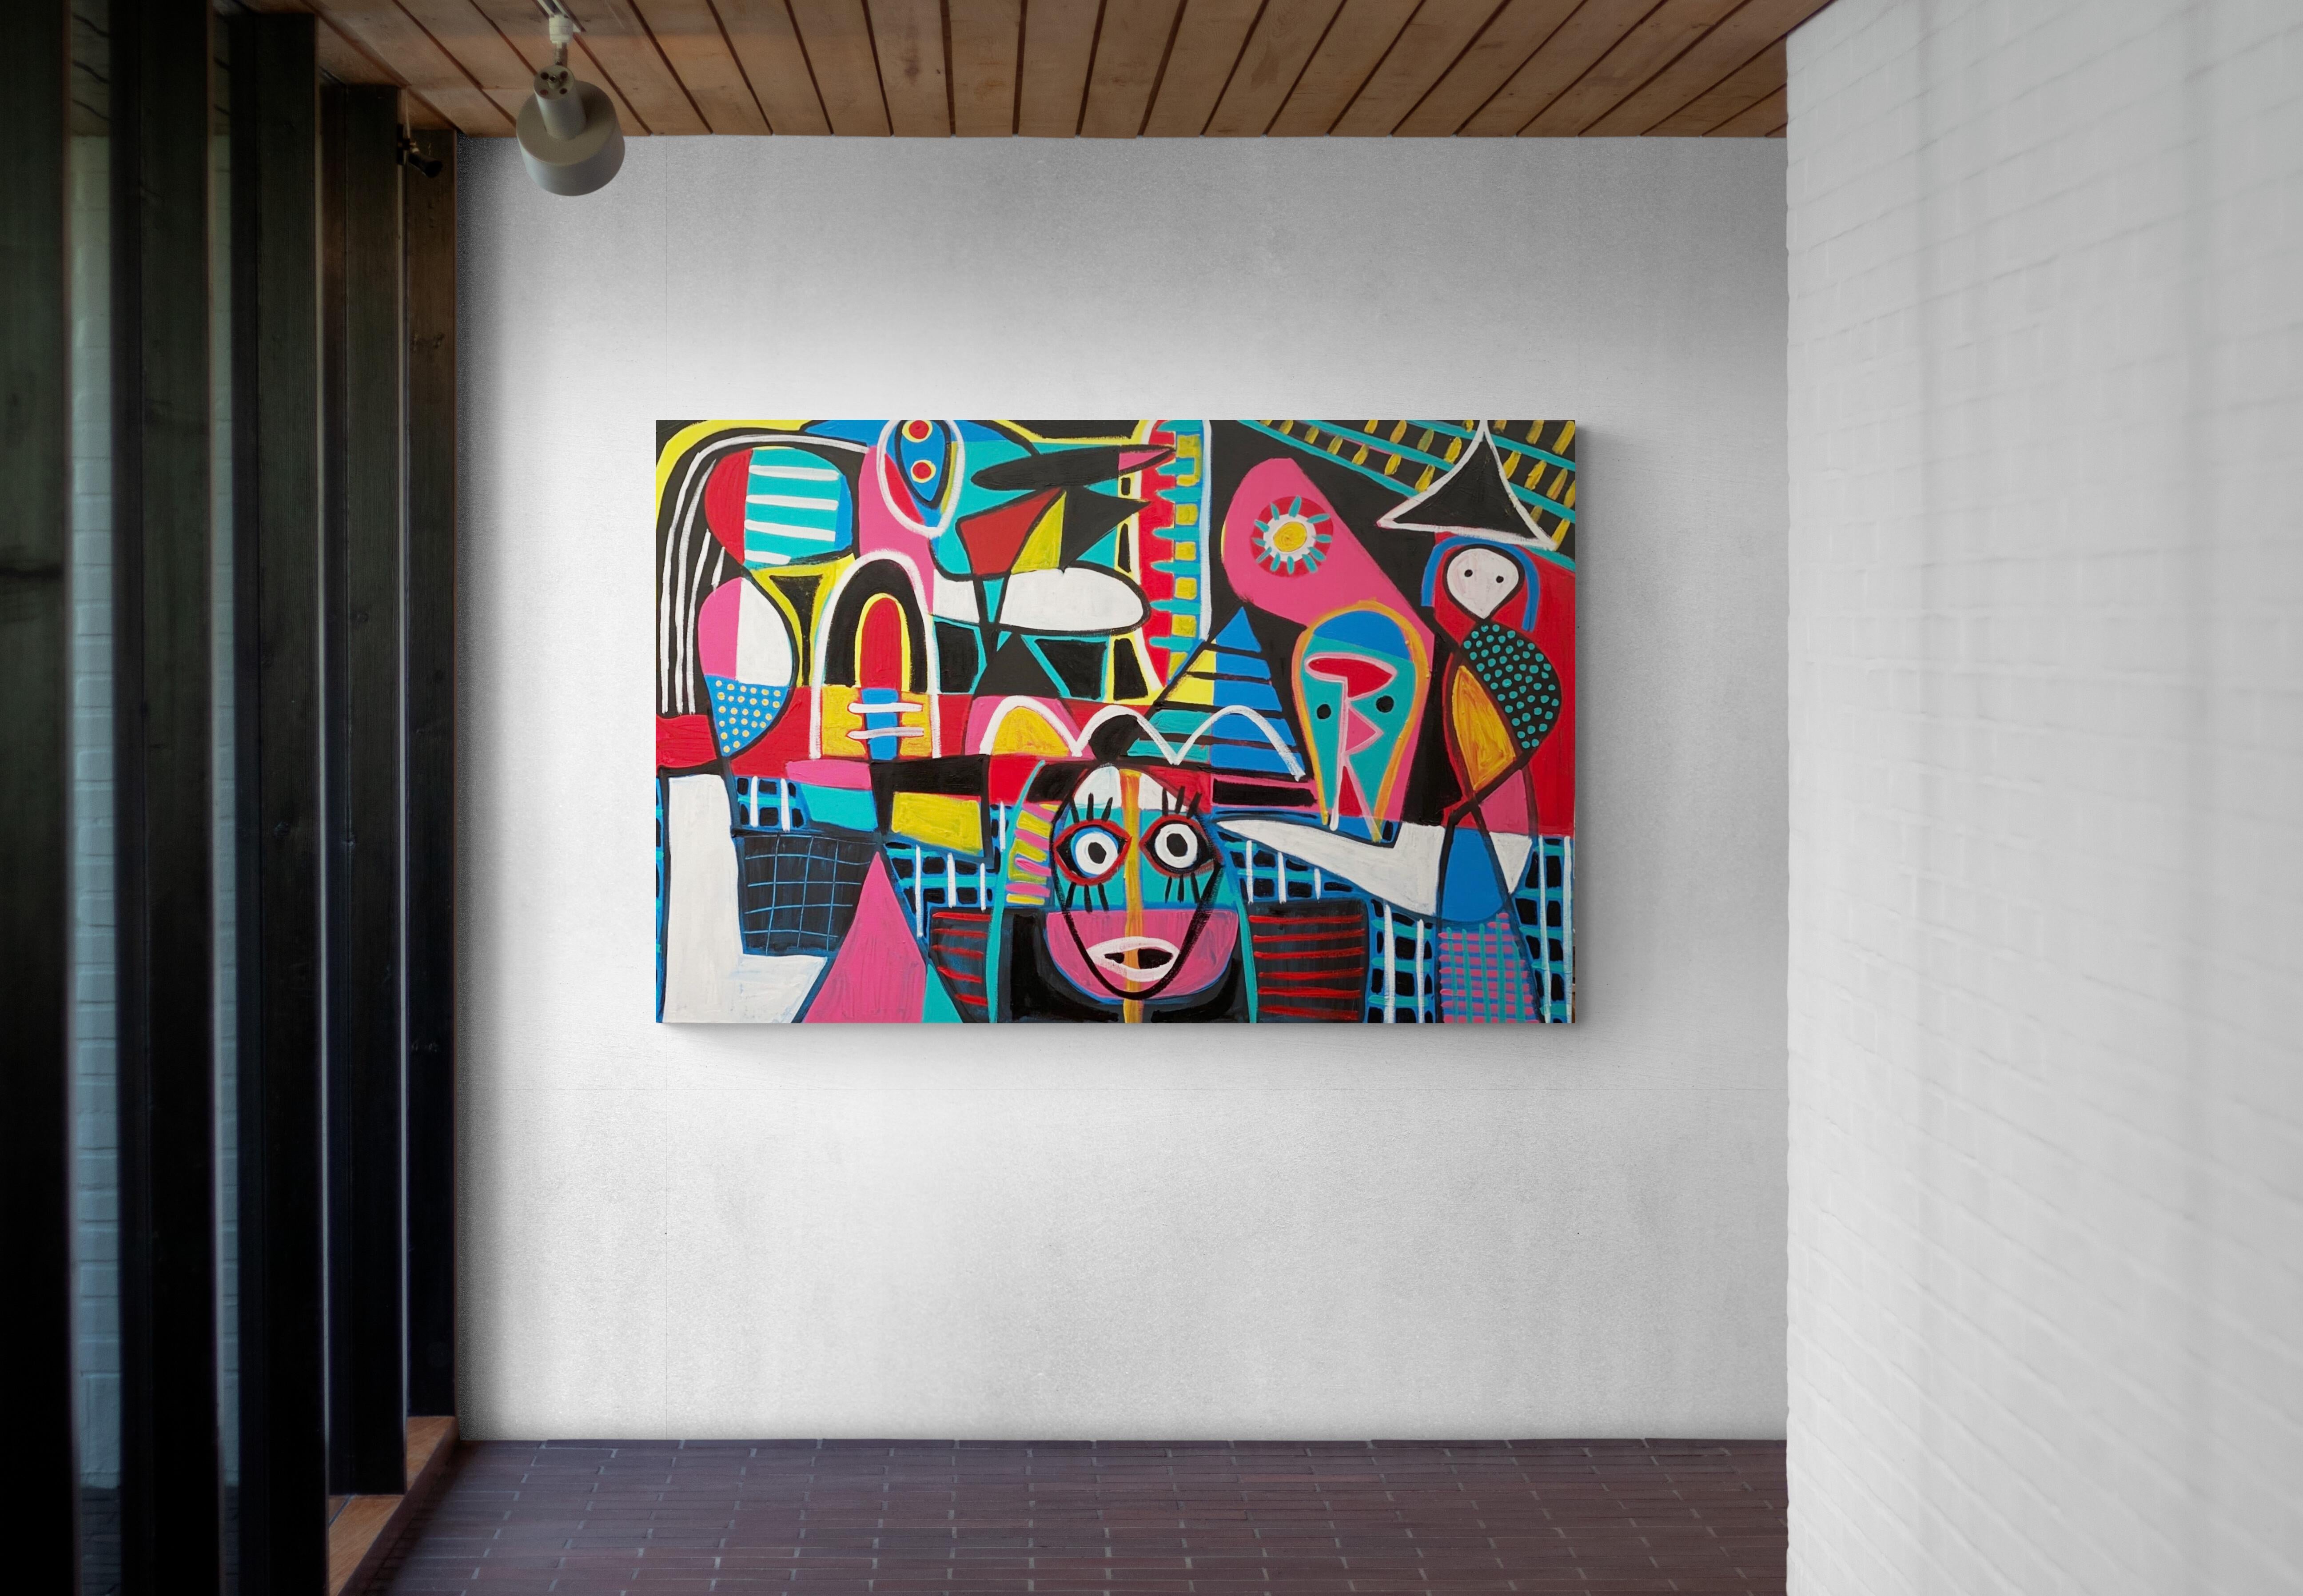 Contemporary Art, Abstract Painting
Acrylic on canvas
100x150cm
Signed 



About the artist
Enrique Pichardo (Mexico City, 1973) graduated from Escuela Nacional de Pintura, Escultura y Grabado (ENPEG) “La Esmeralda”. As a Mexican Contemporary